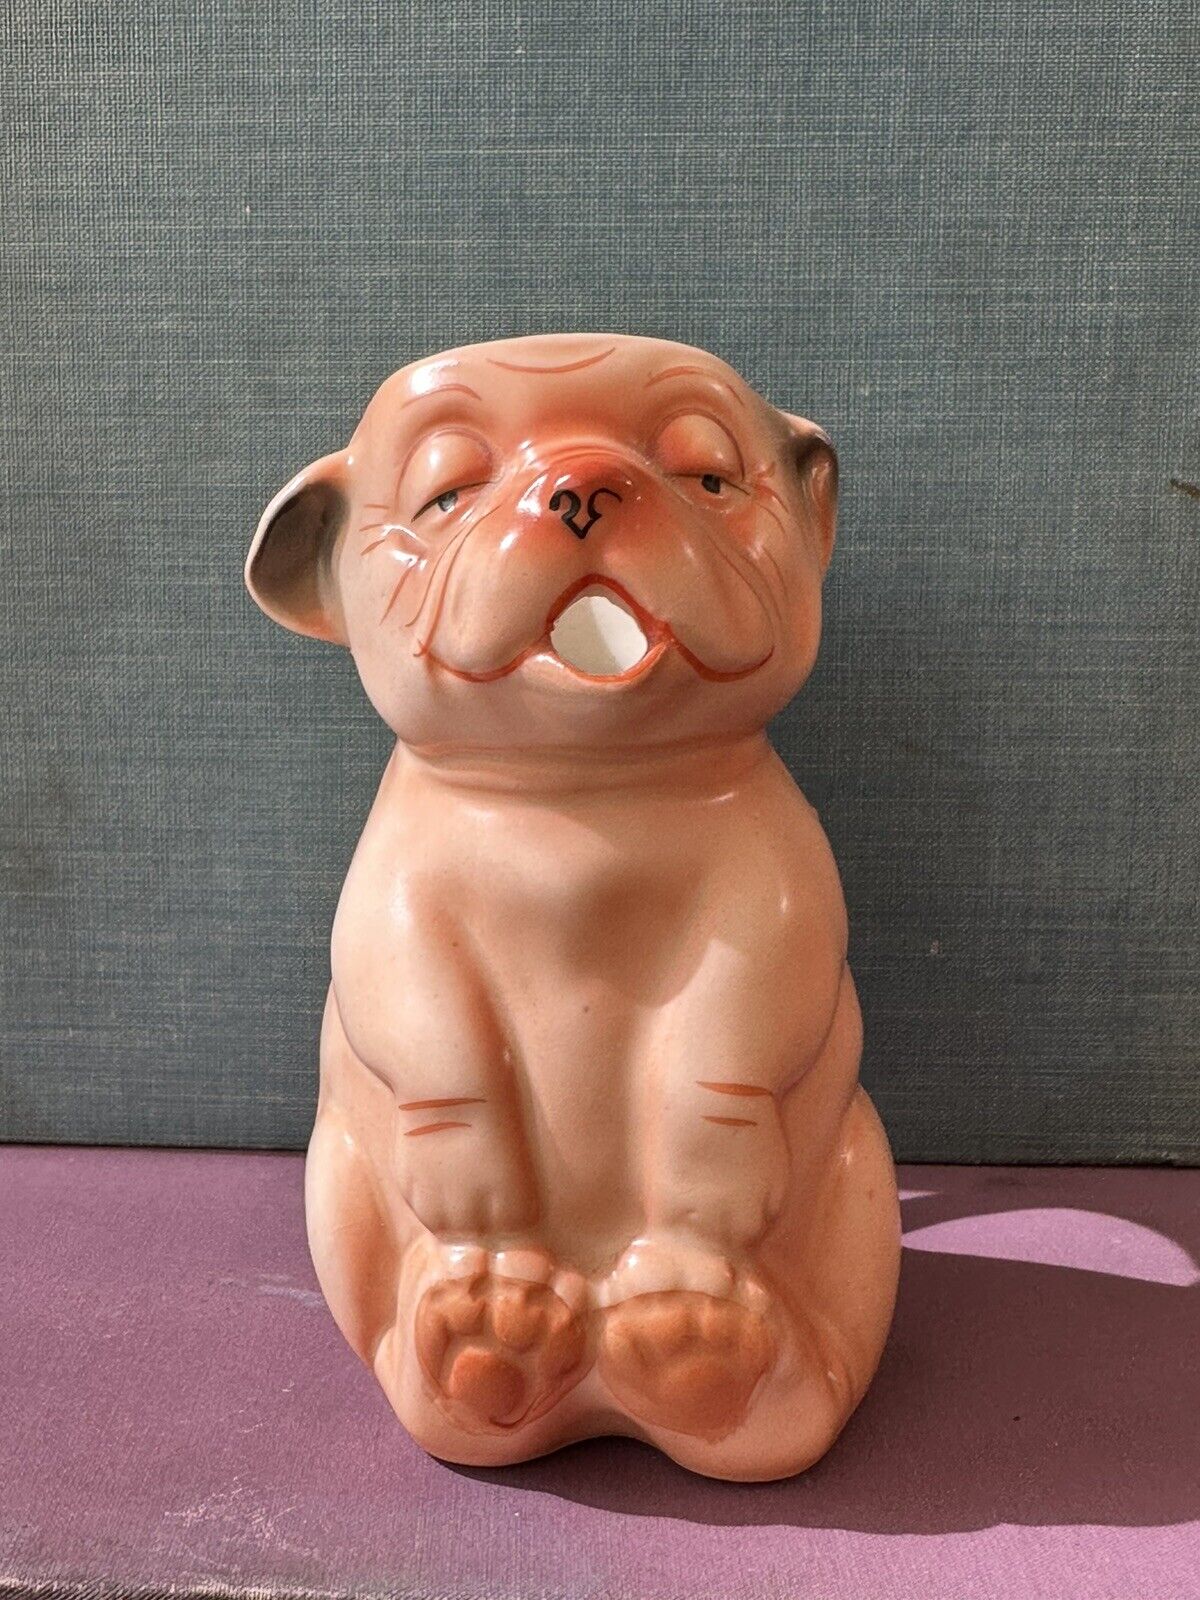 Vintage 1930s George E. Studdy Bonzo dog ceramic creamer pitcher made in Germany